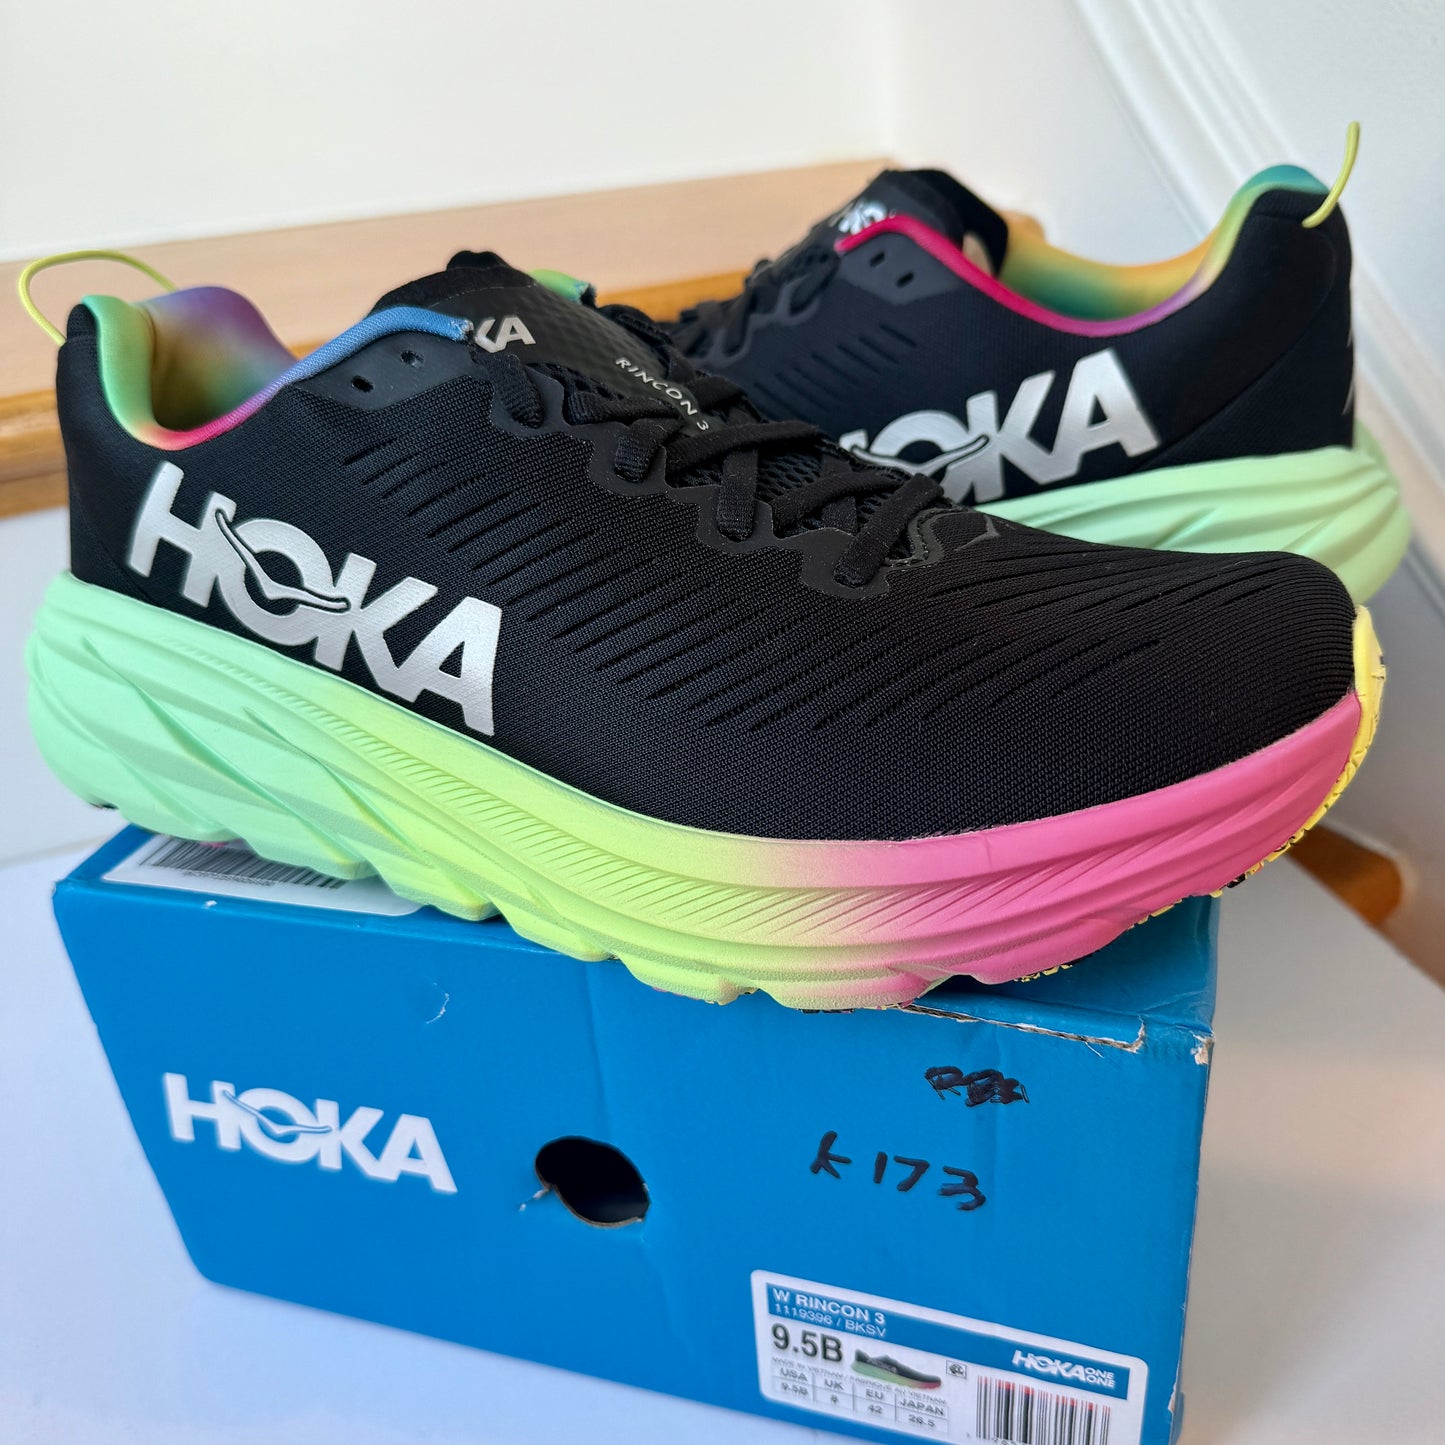 Hoka Rincon 3 Womens Running Shoes Black / Multicolor / Silver Hoka One One